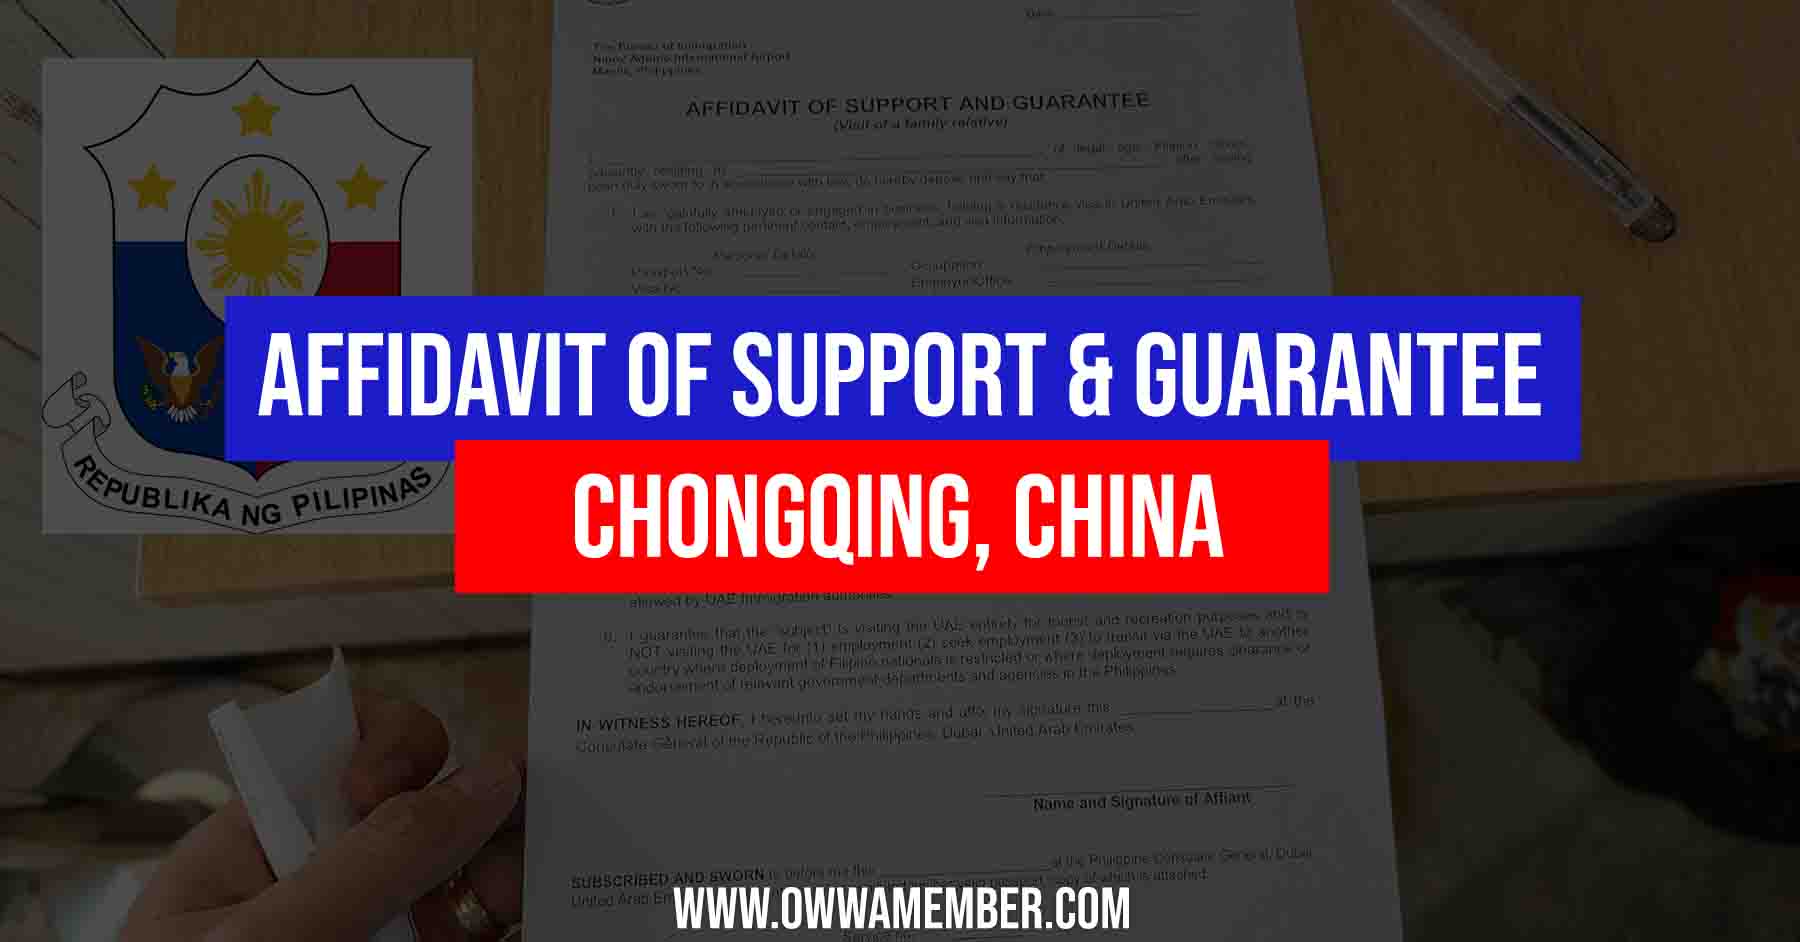 affidavit of support and guarantee chongqing china philippine consulate